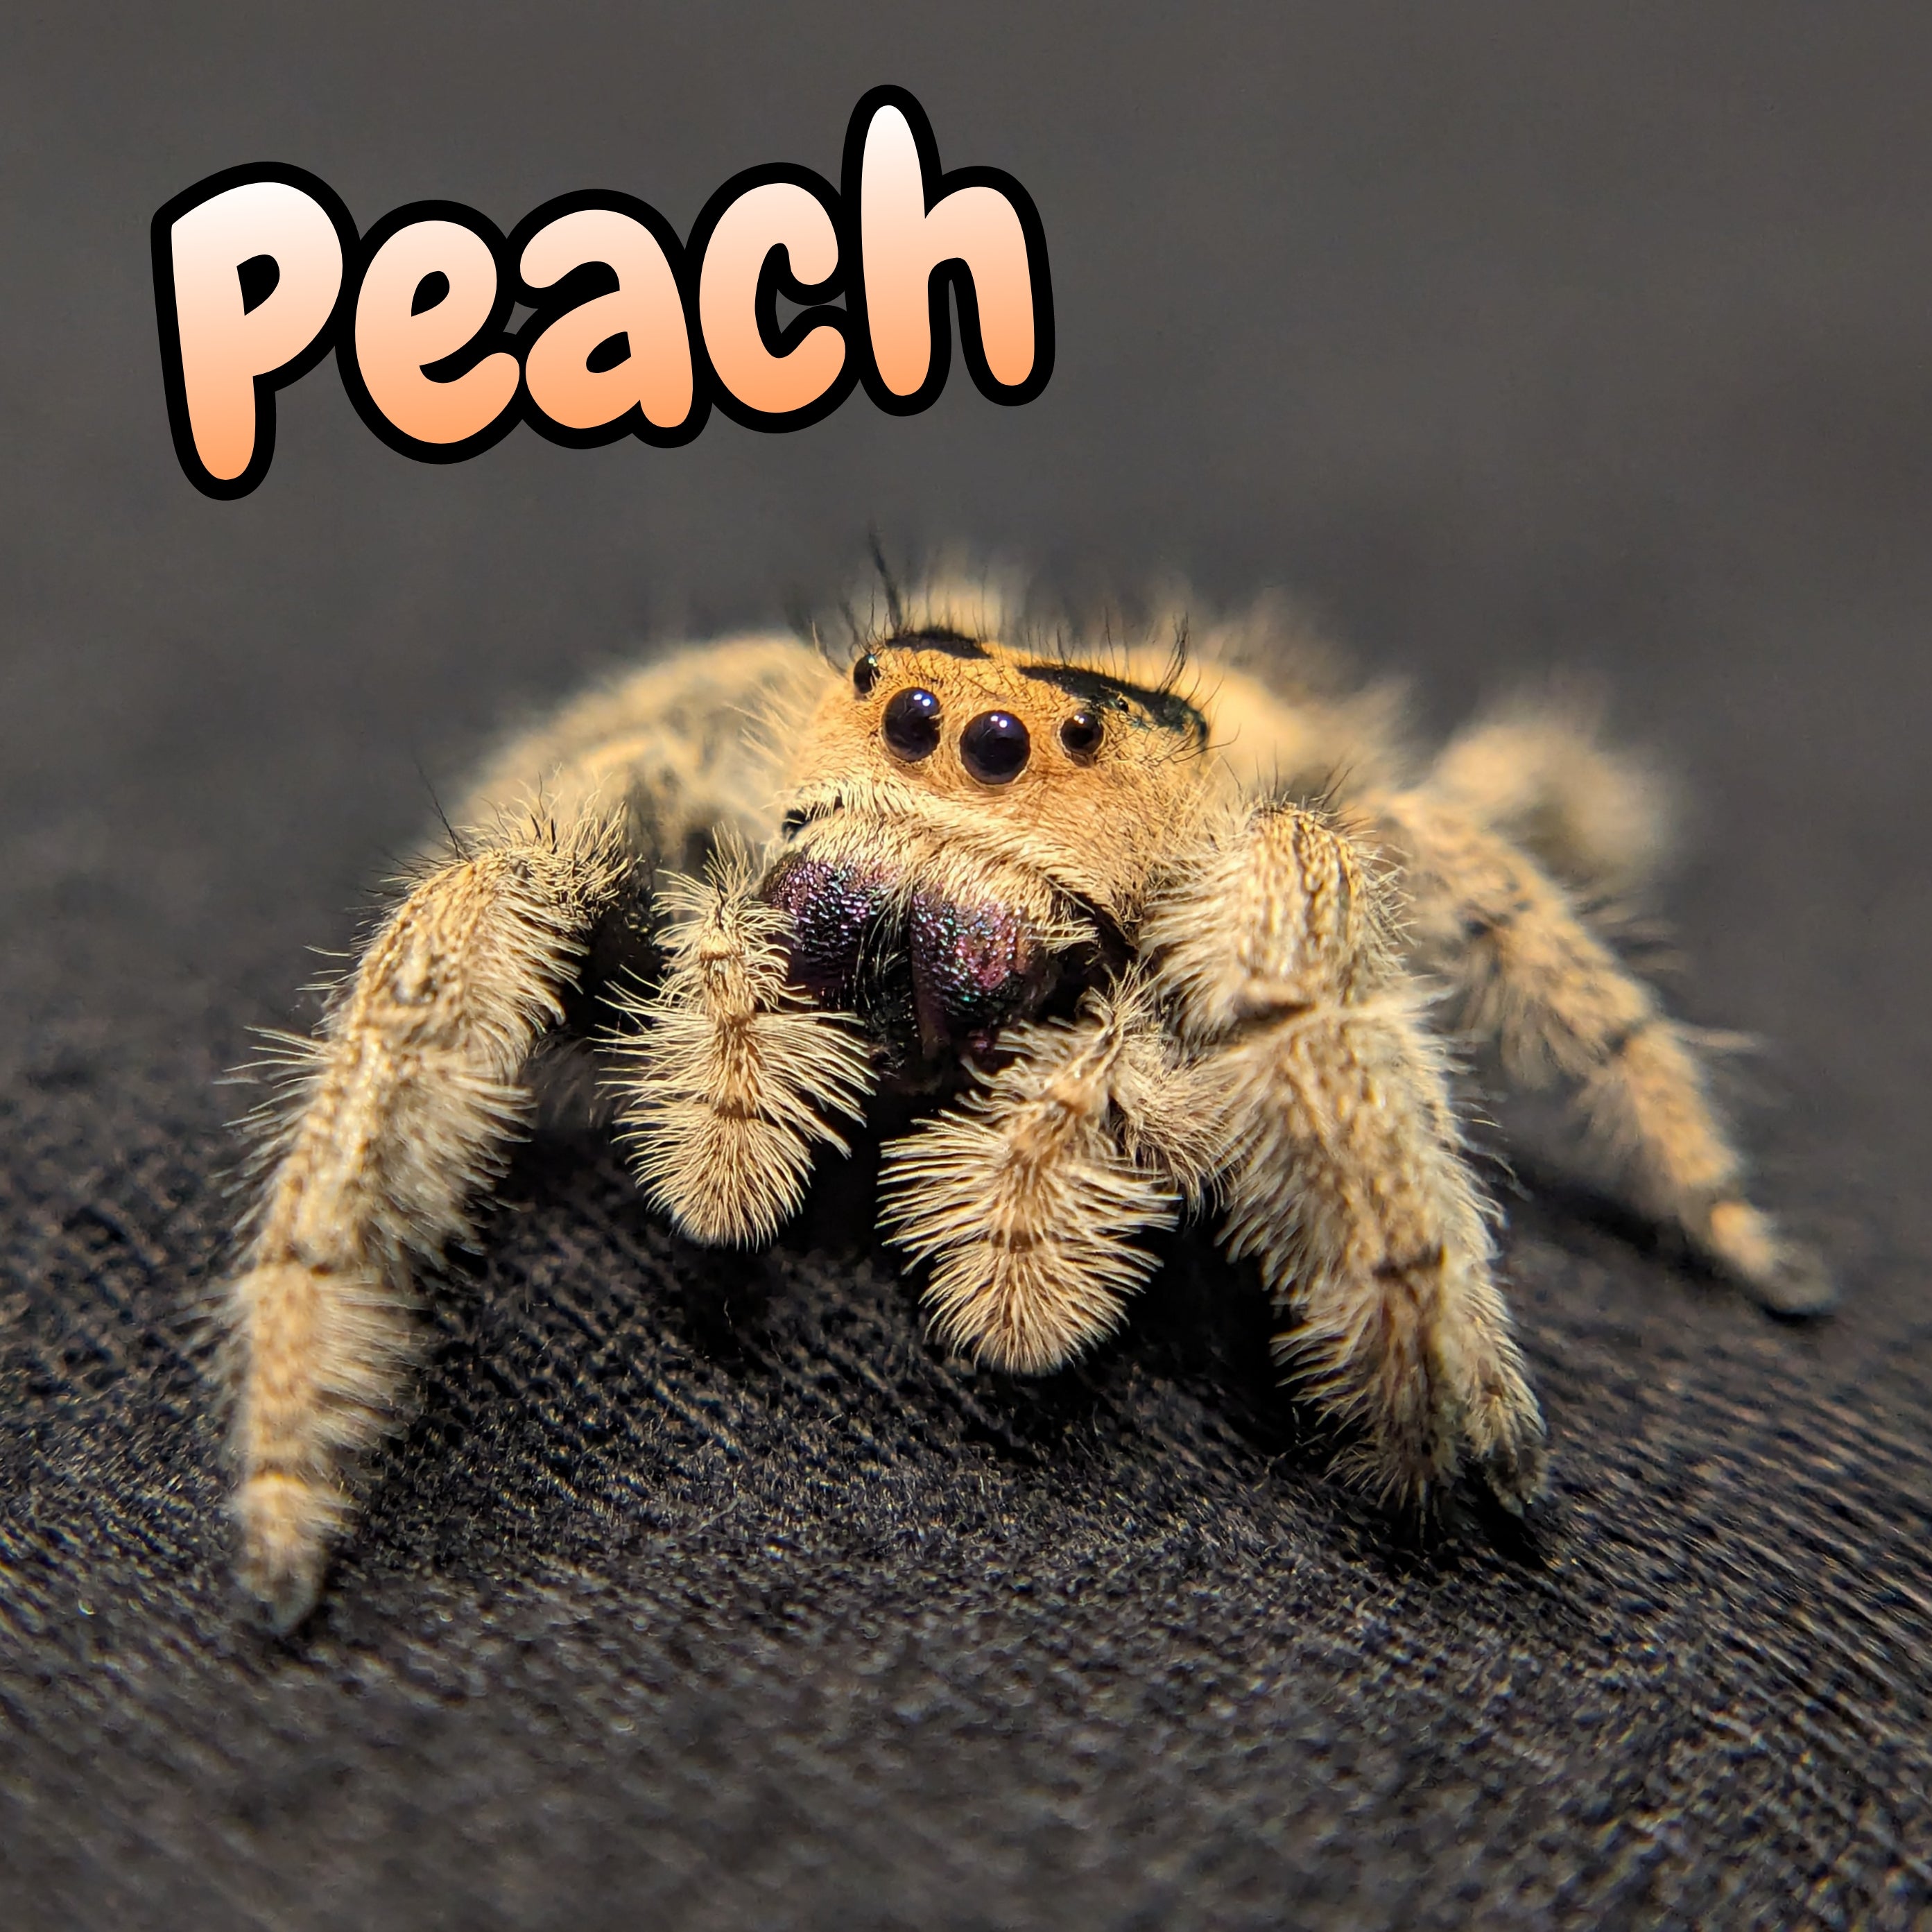 Apalachicola Regal Jumping Spider "Peach"